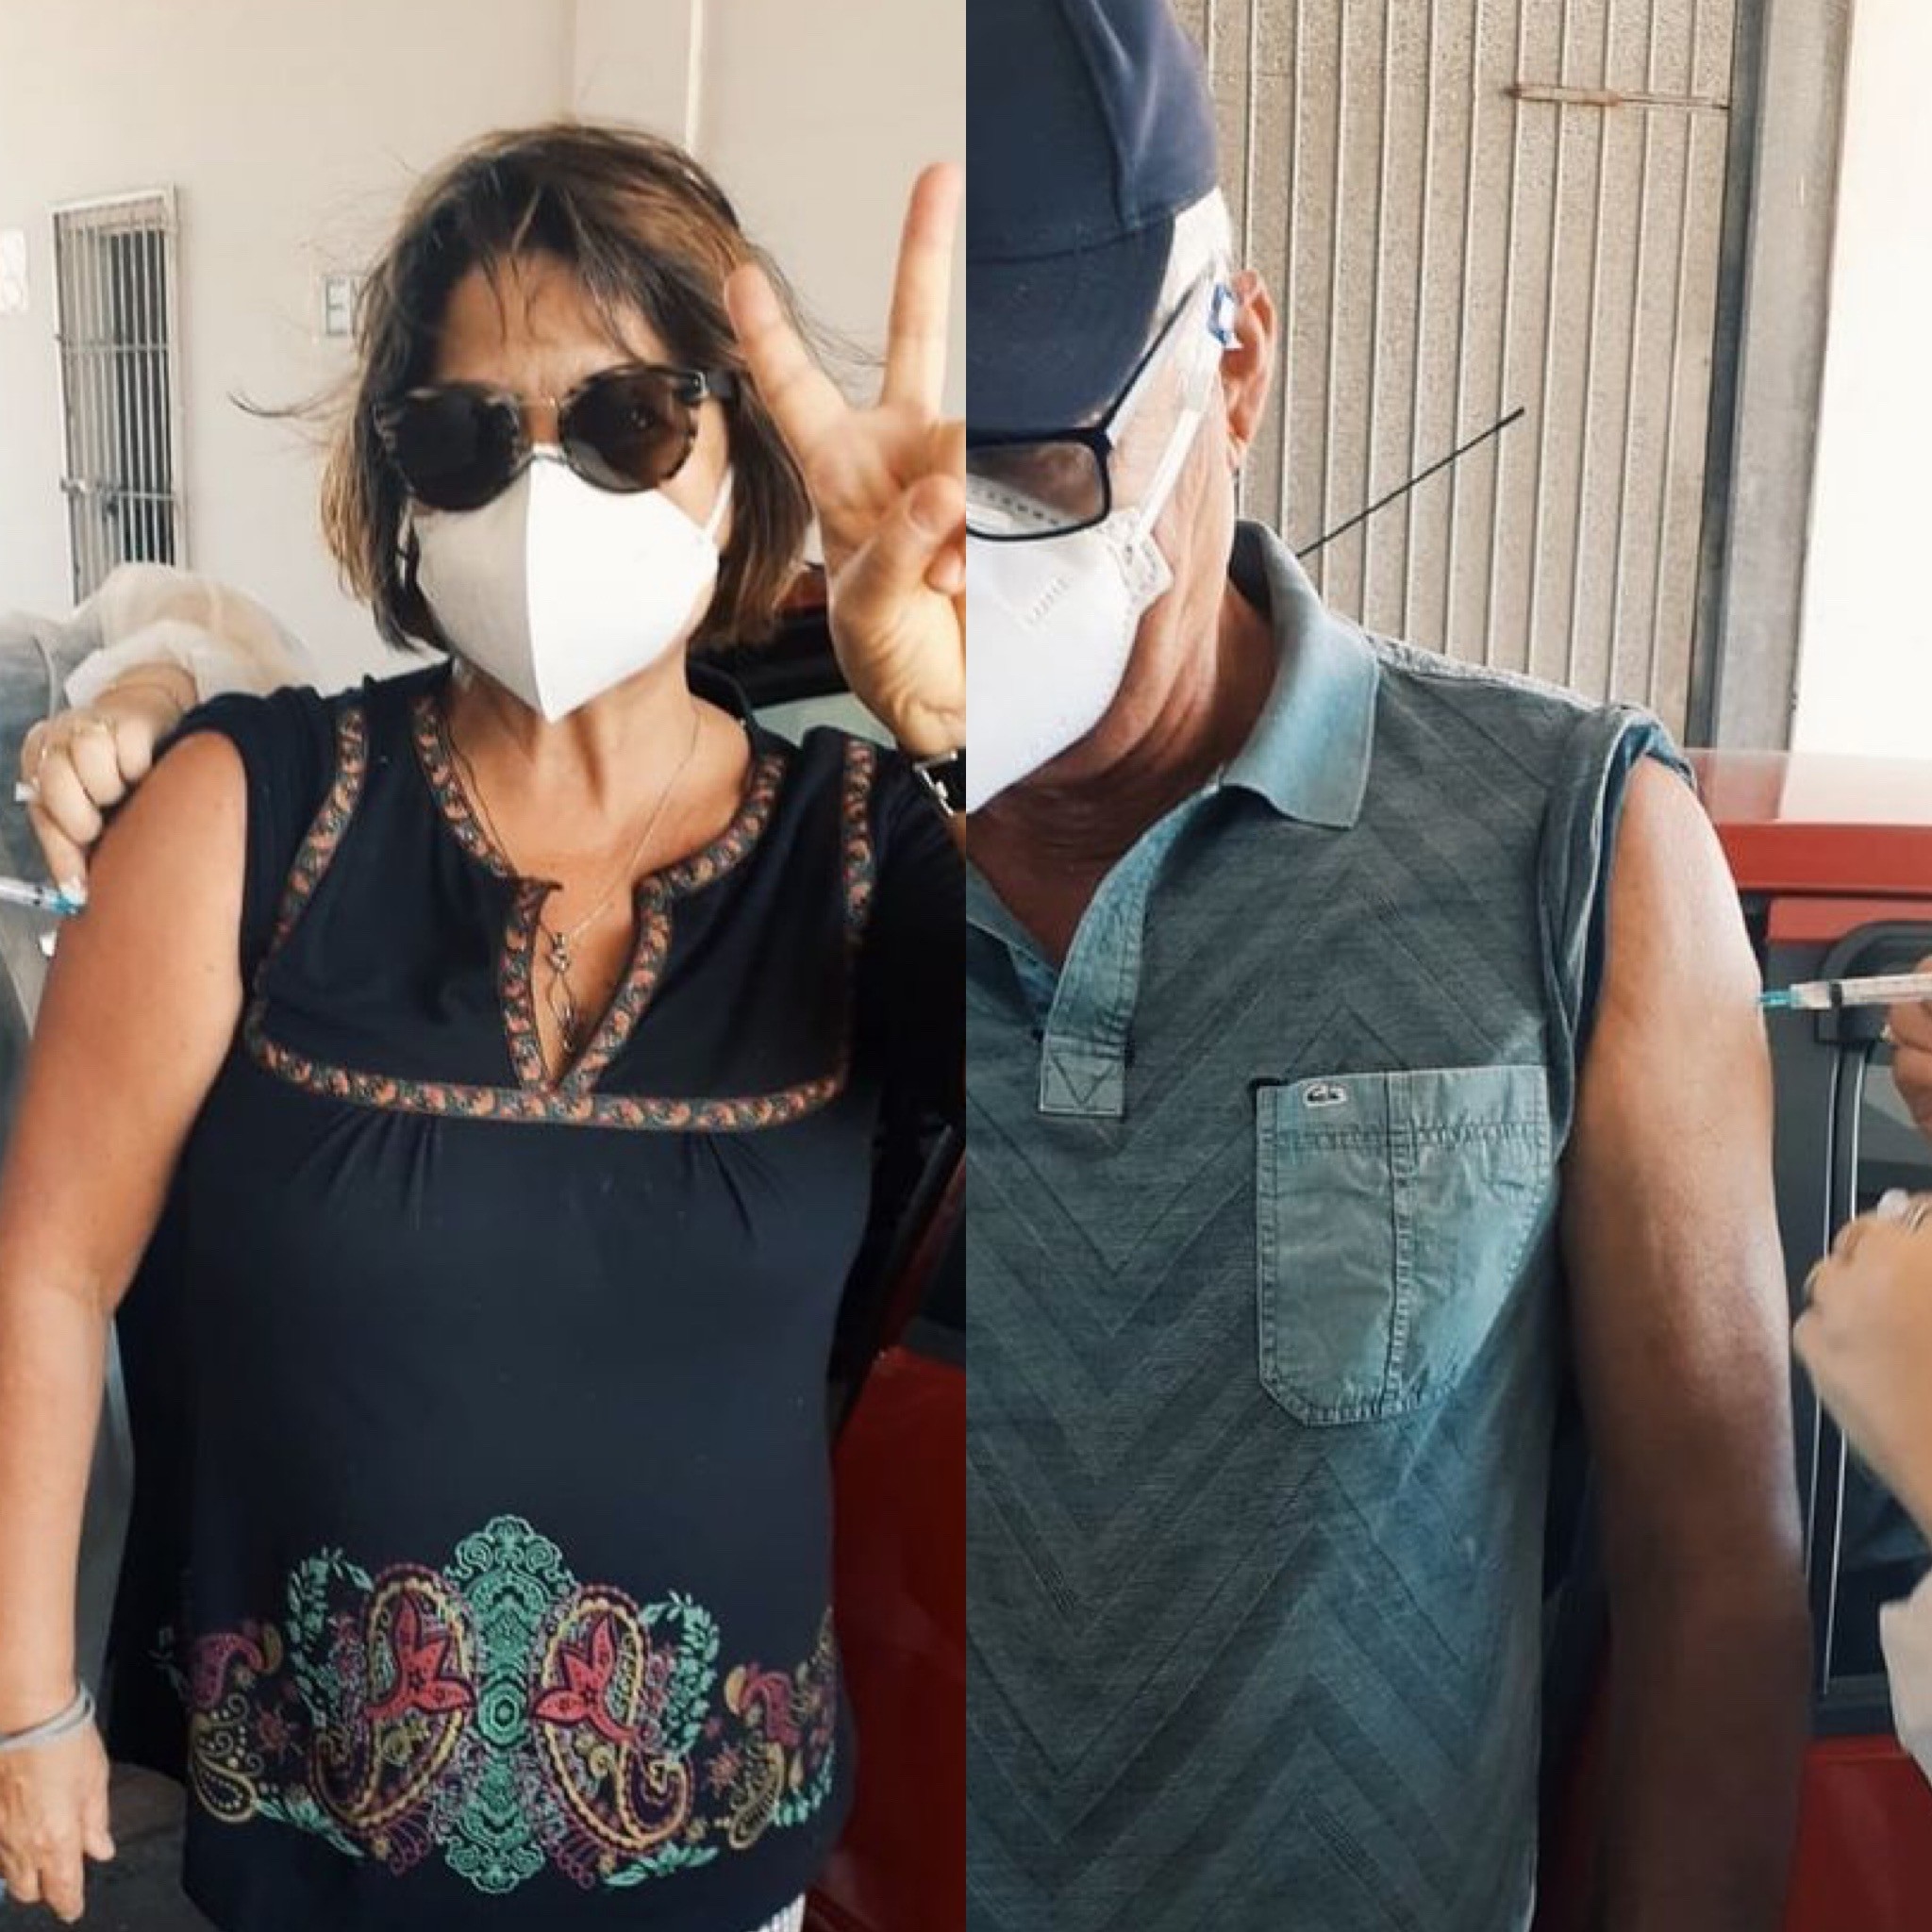 Titi Muller celebra pais vacinados: "Alívio" (Foto: Instagram)